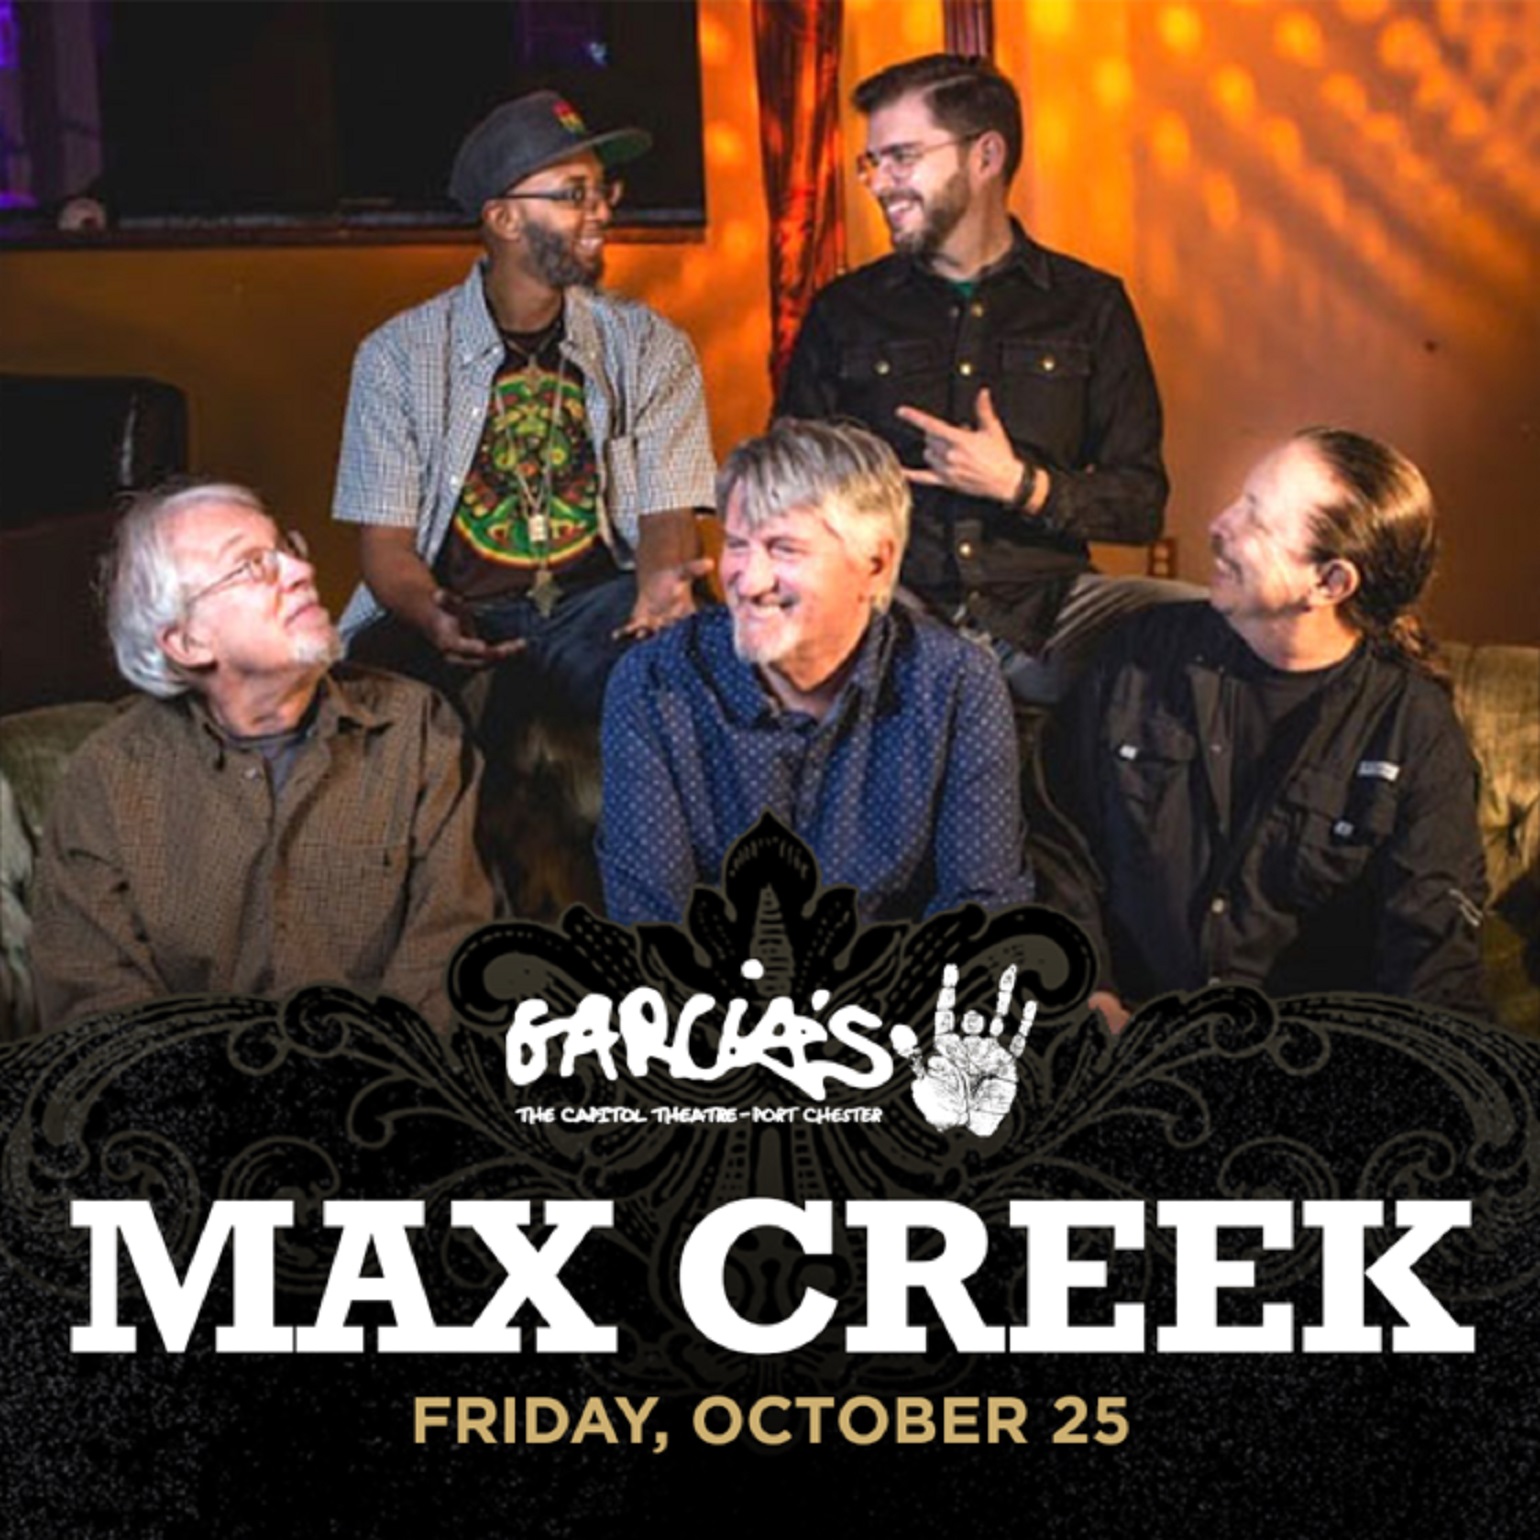 Max Creek Plays Garcia's on Friday, OCT 25